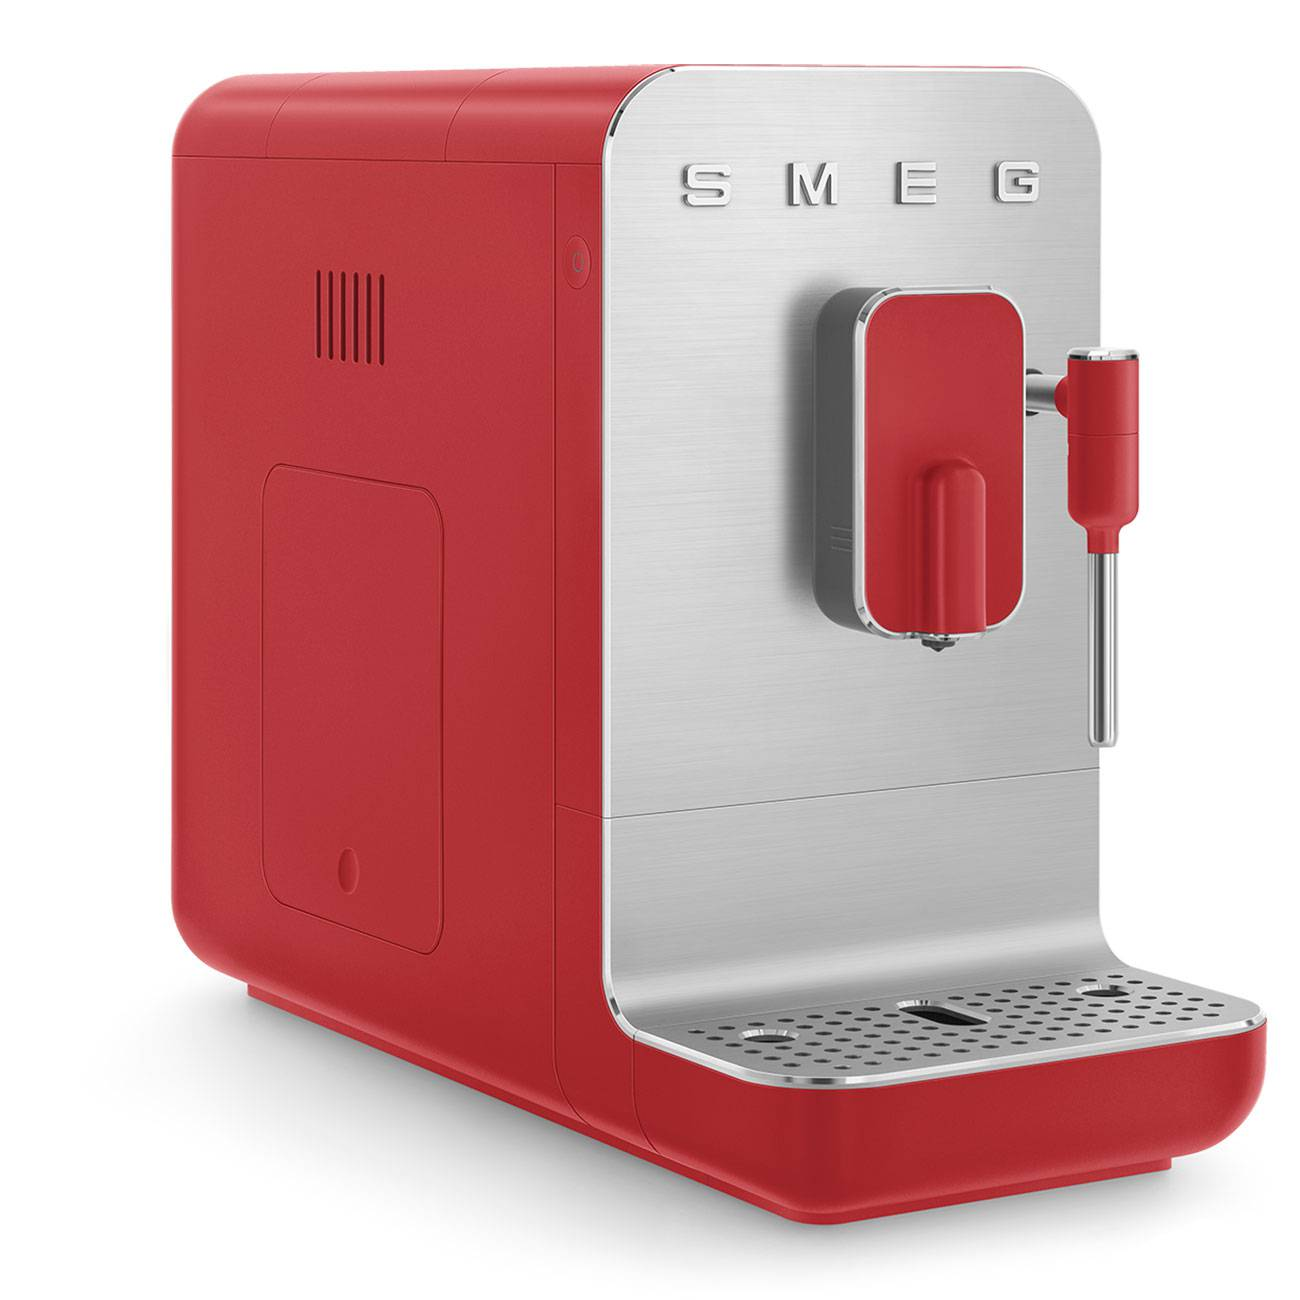 SMEG Artikel|Rot|Stock Smeg Kleingeräte Rot Kaffeevollautomat BCC02RDMEU mit bcc02|Bestseller|Kaffee|Kaffeevollautomat|Kleingerät|Meistgesuchte Dampffunktion